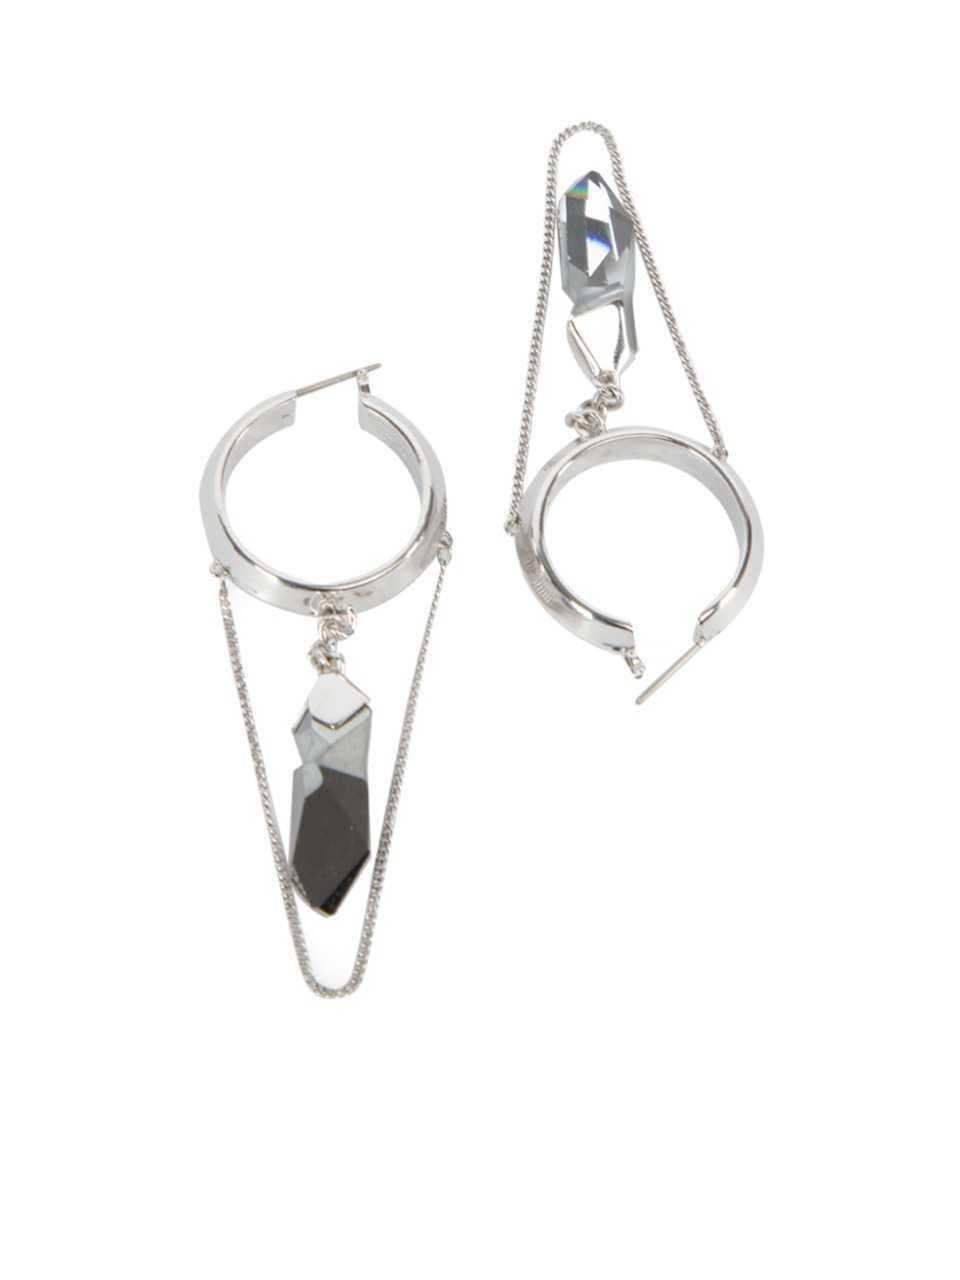 Pre-Loved Jean Paul Gaultier Women's Silver Hoop Earrings with Chain and Gem Acc 1